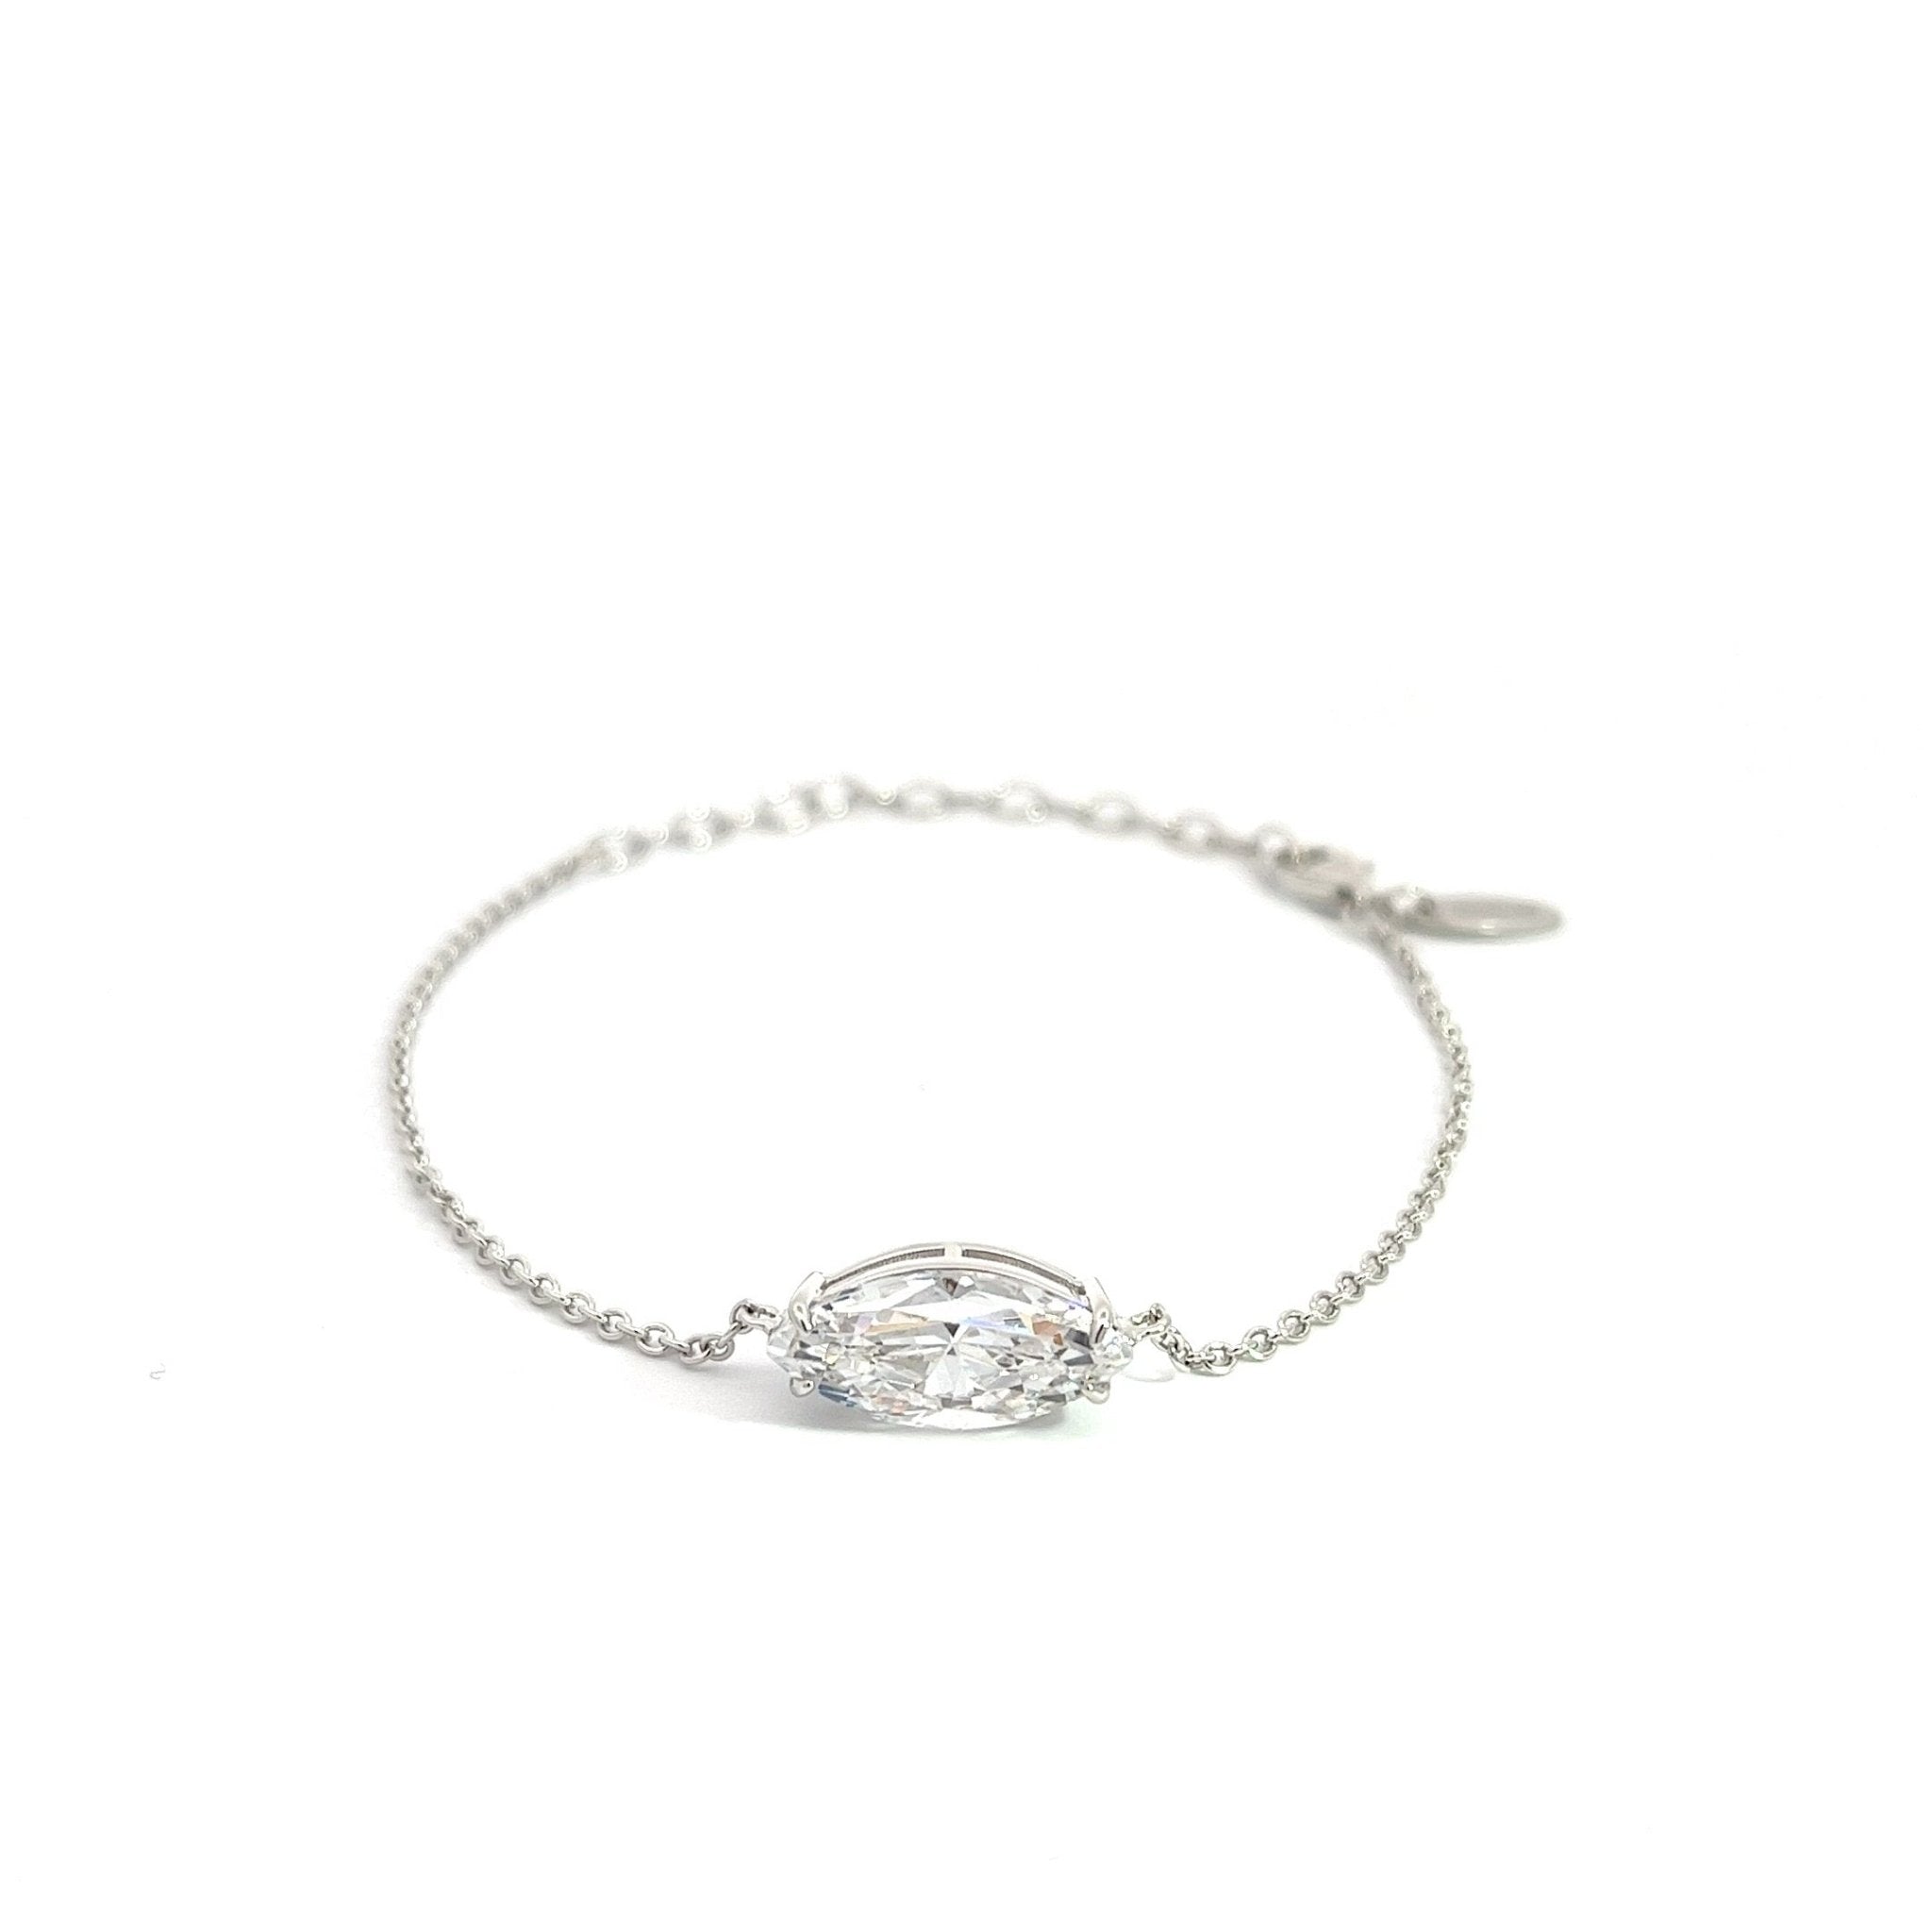 Elegant Marquise Cut 15 x 7 mm CZ Silver Bracelet by Natkina